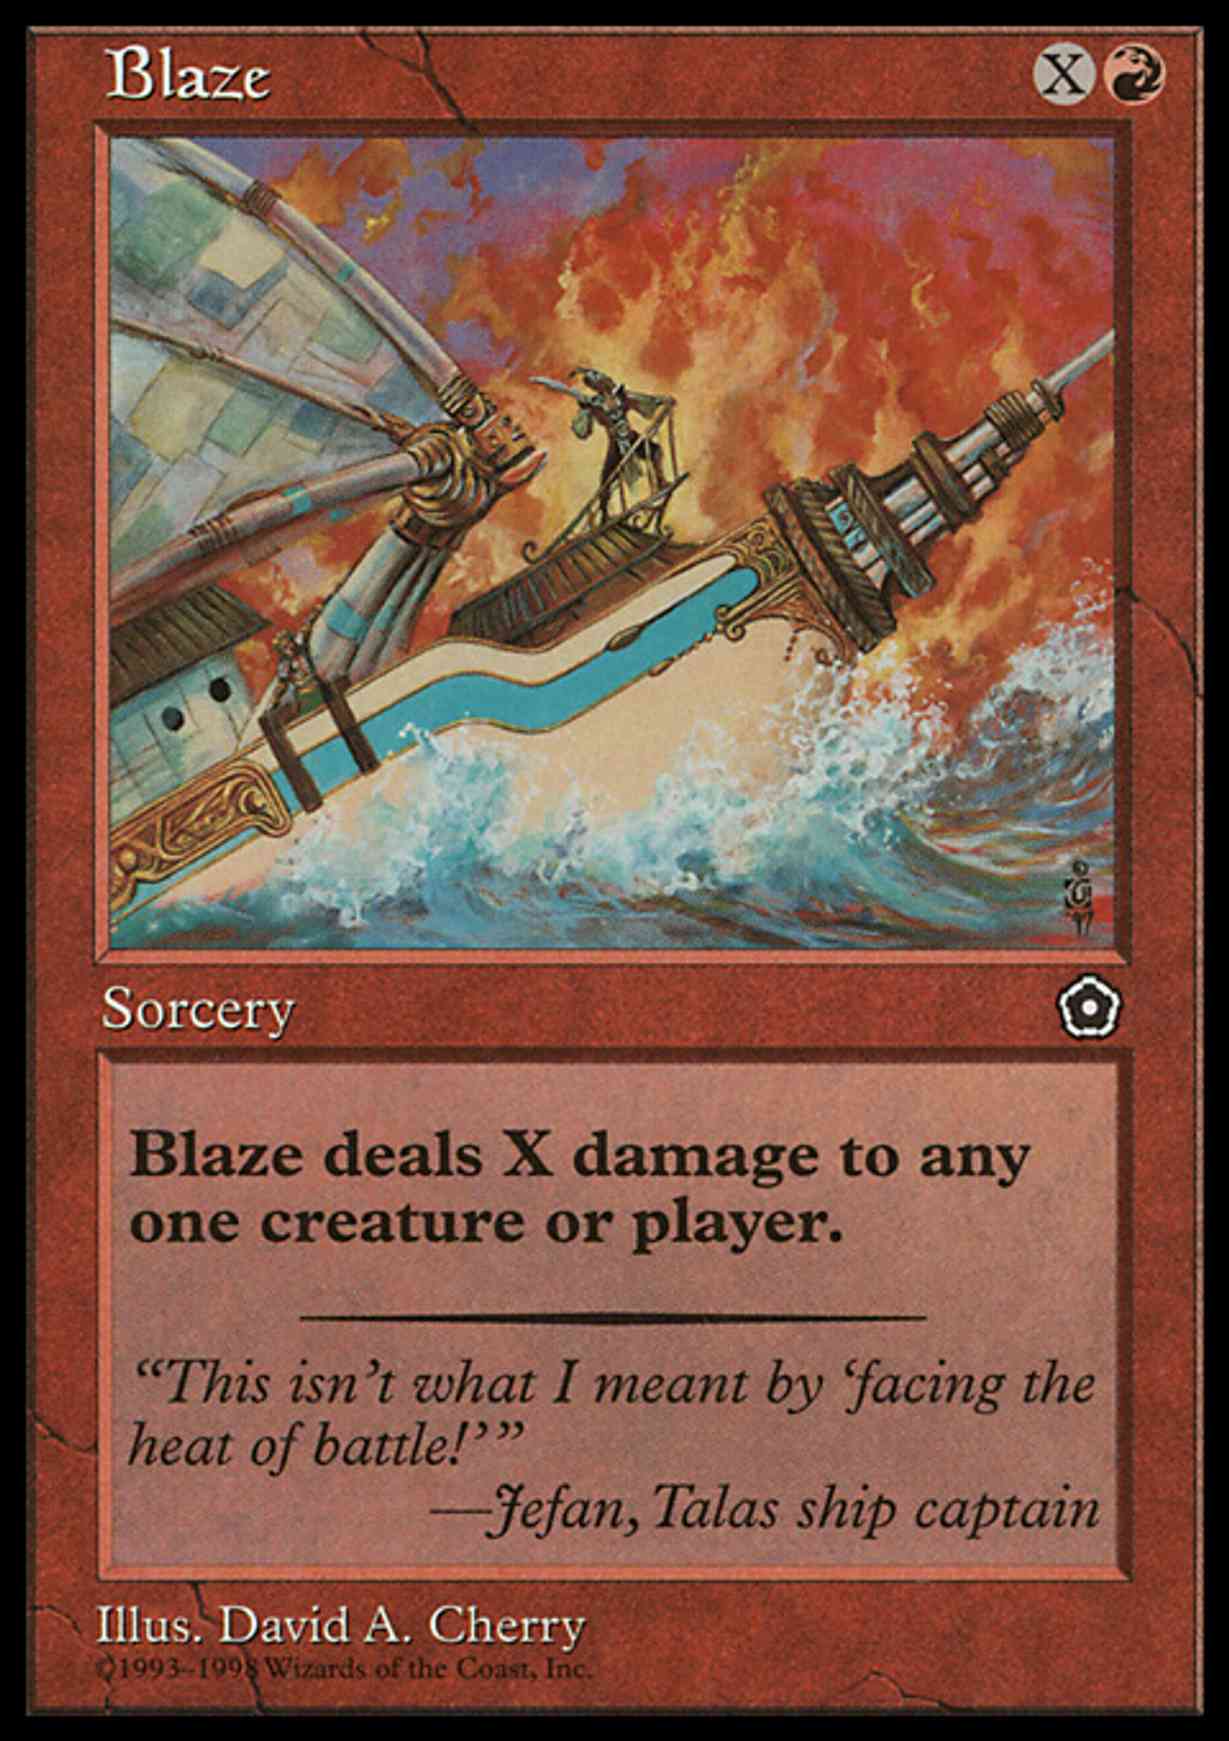 Blaze magic card front